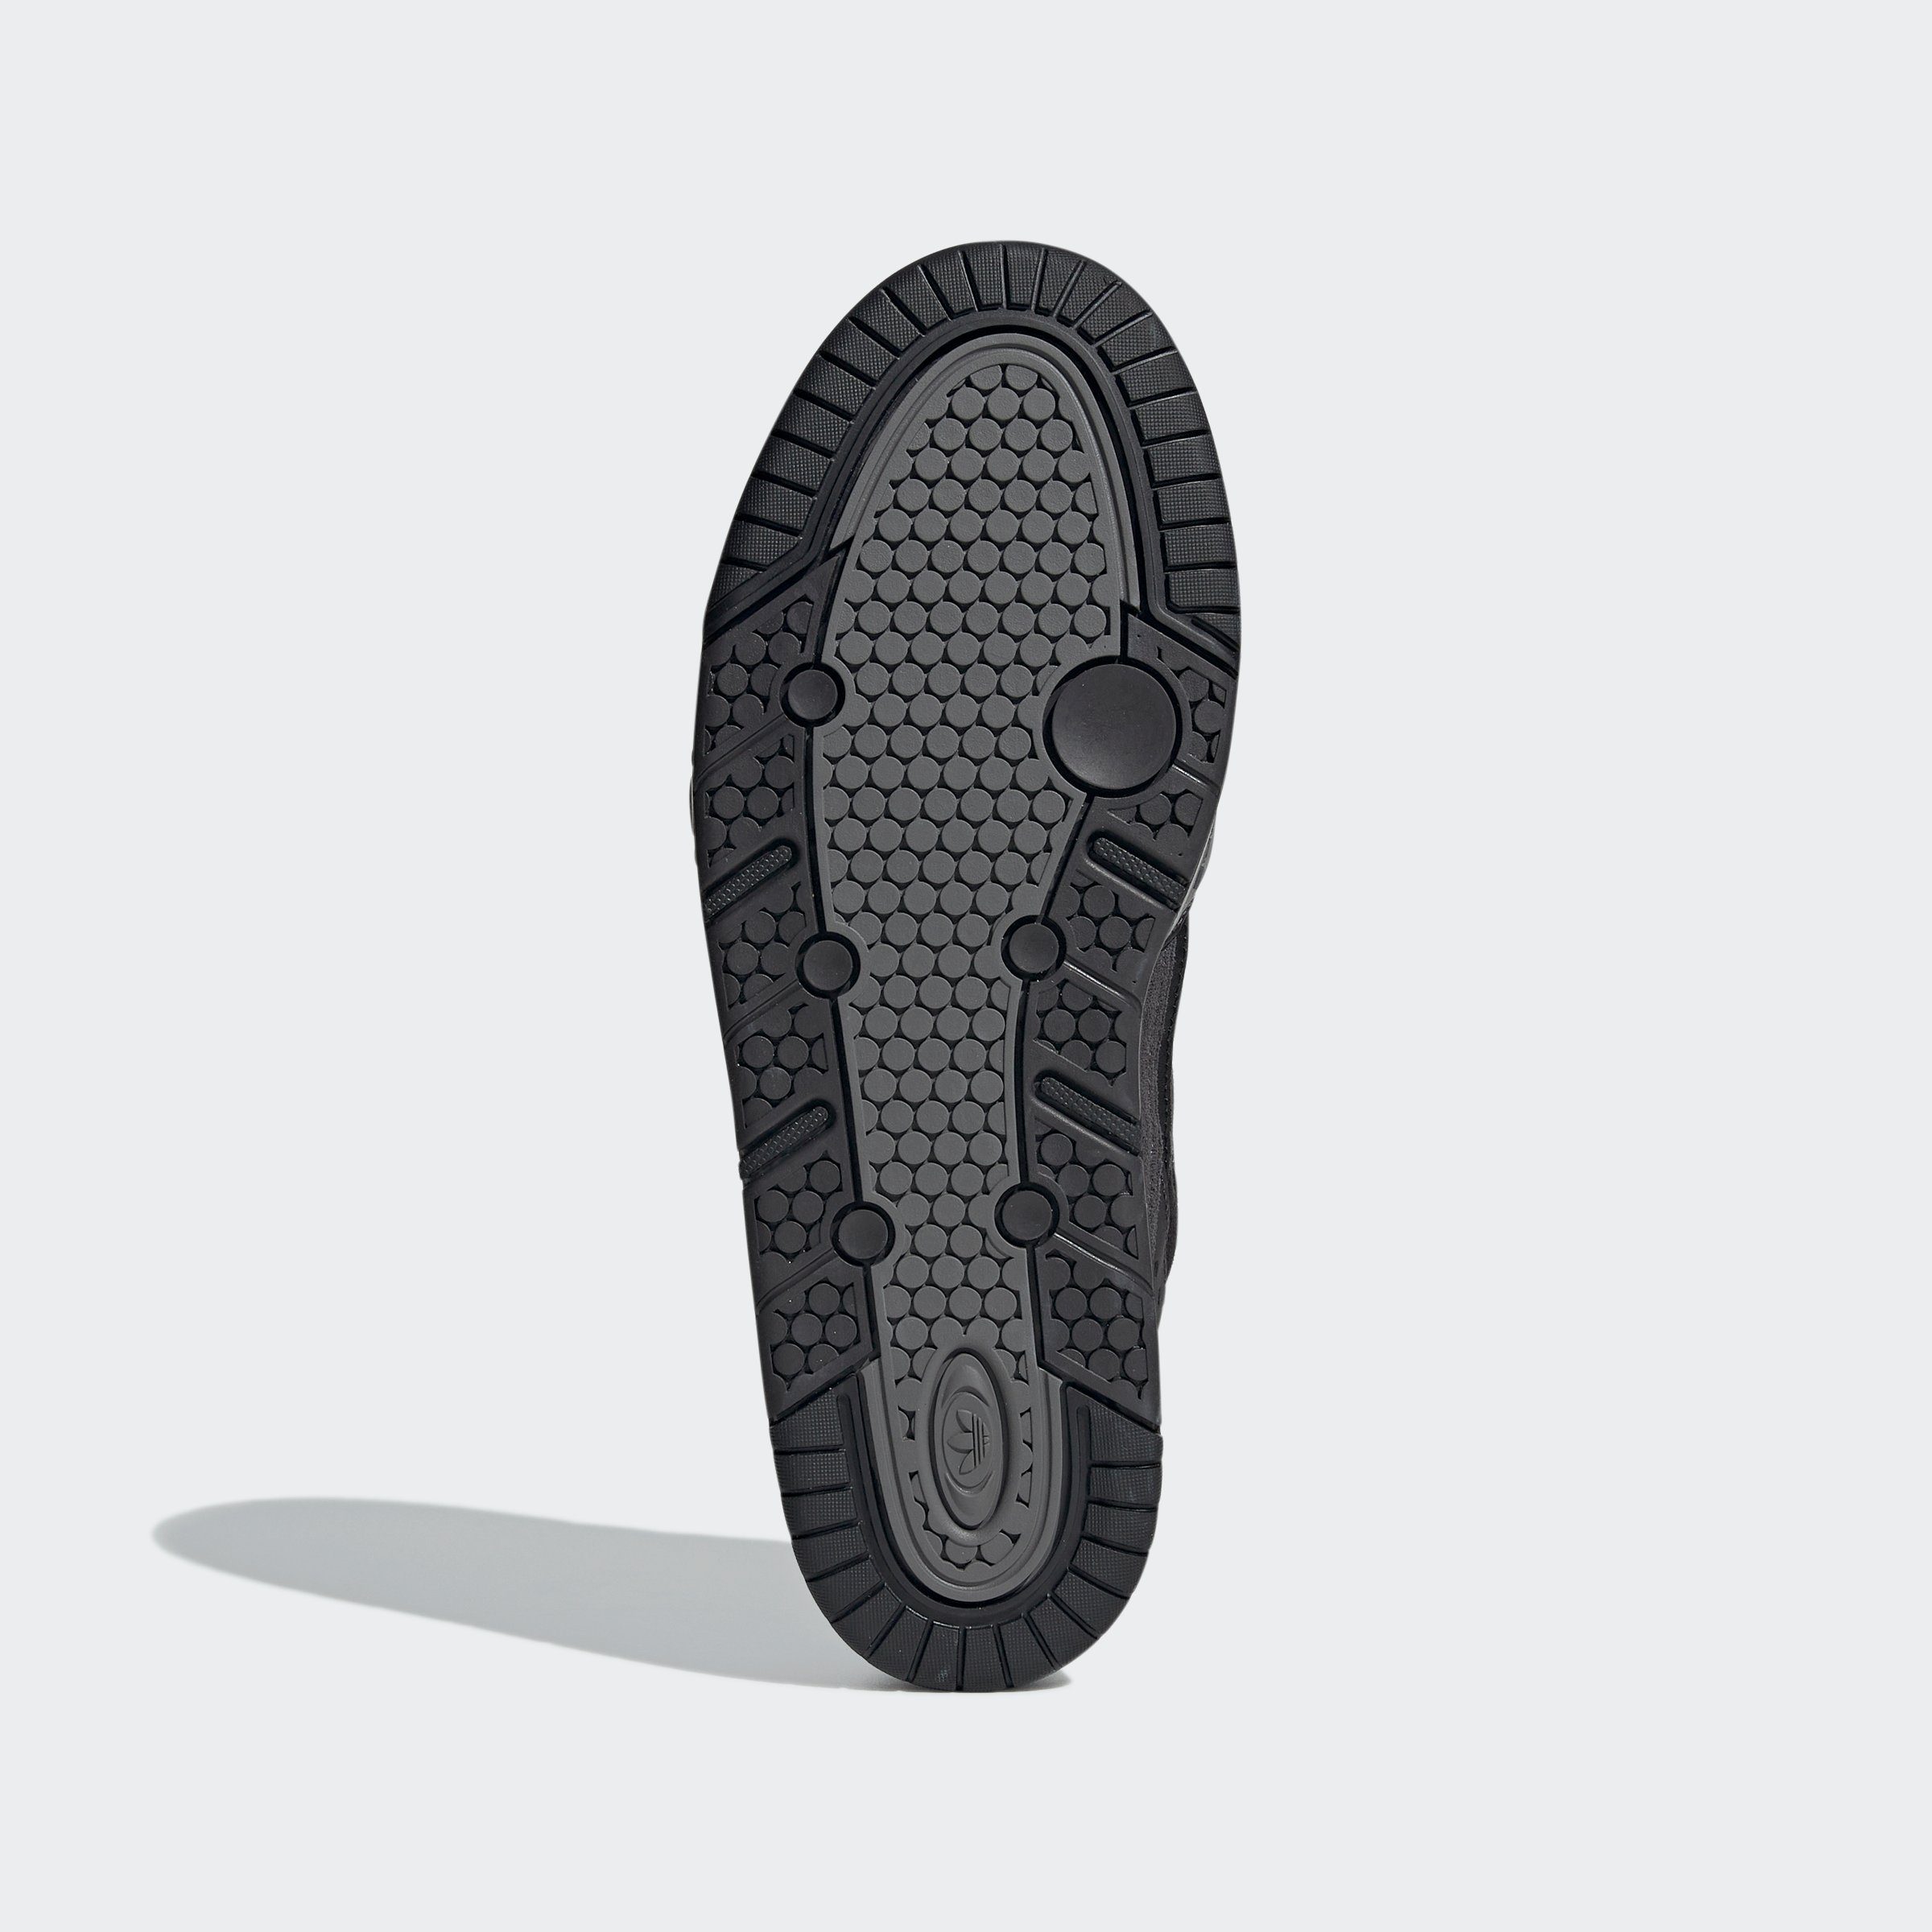 adidas Originals ADI2000 Sneaker Utility Black Black Utility / / Core Black